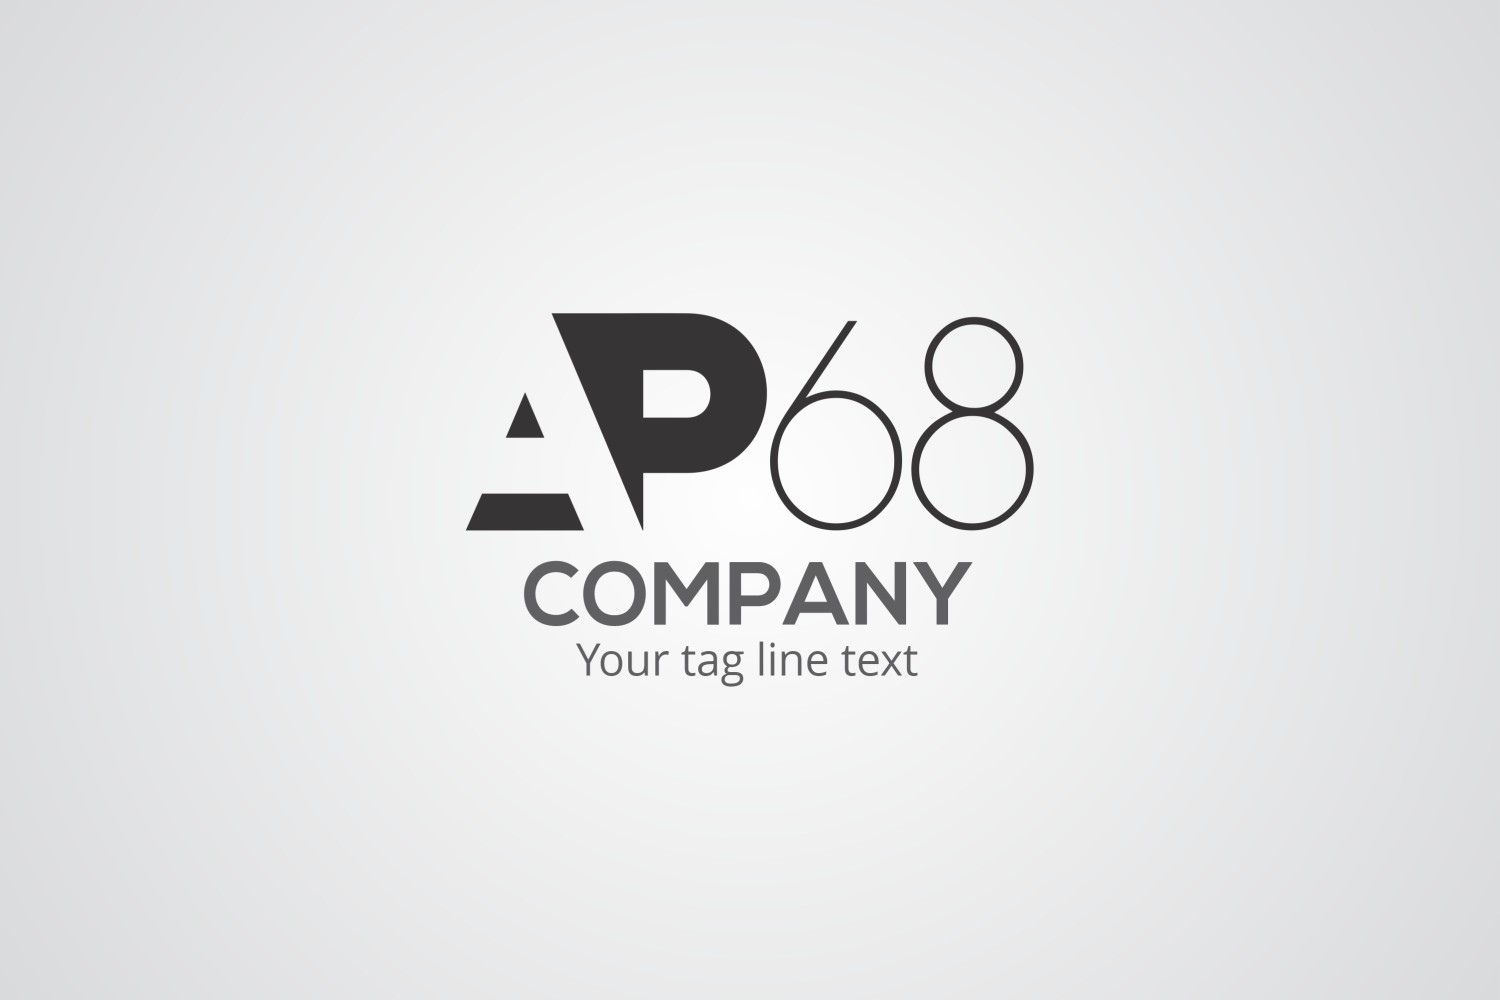 AP68 Company Logo Design Template